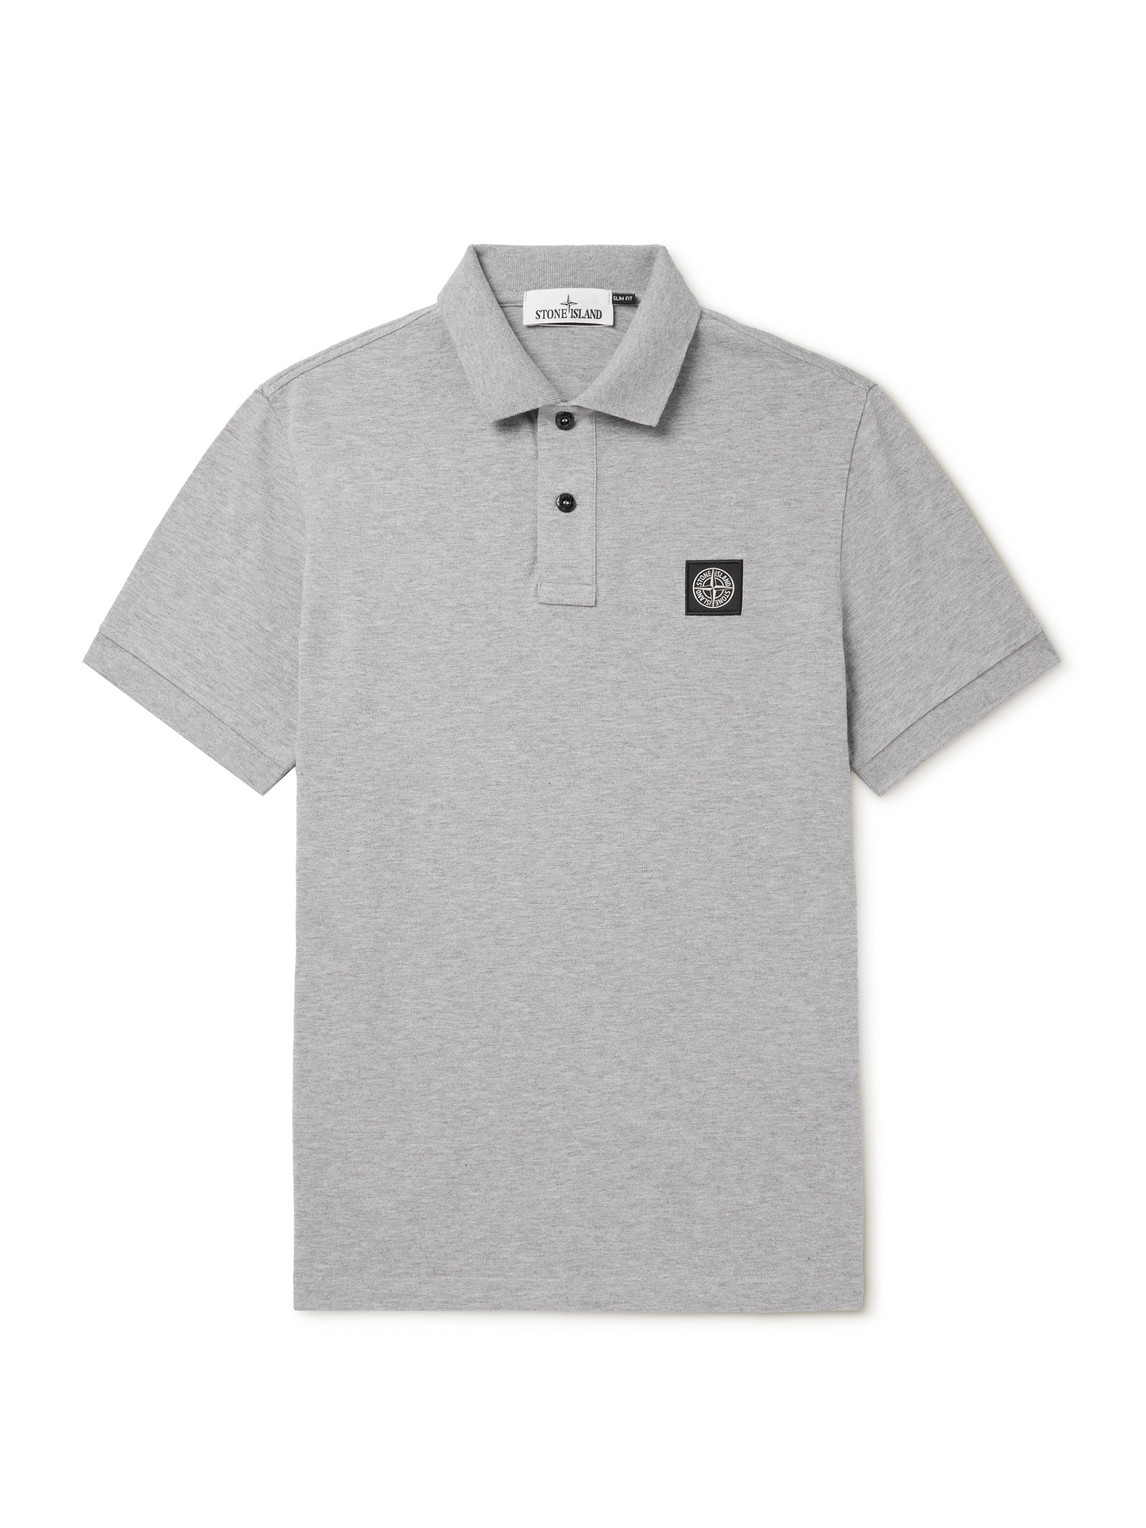 Stone Island - Logo-Appliquéd Cotton-Blend Piqué Polo Shirt - Men - Gray - S von Stone Island